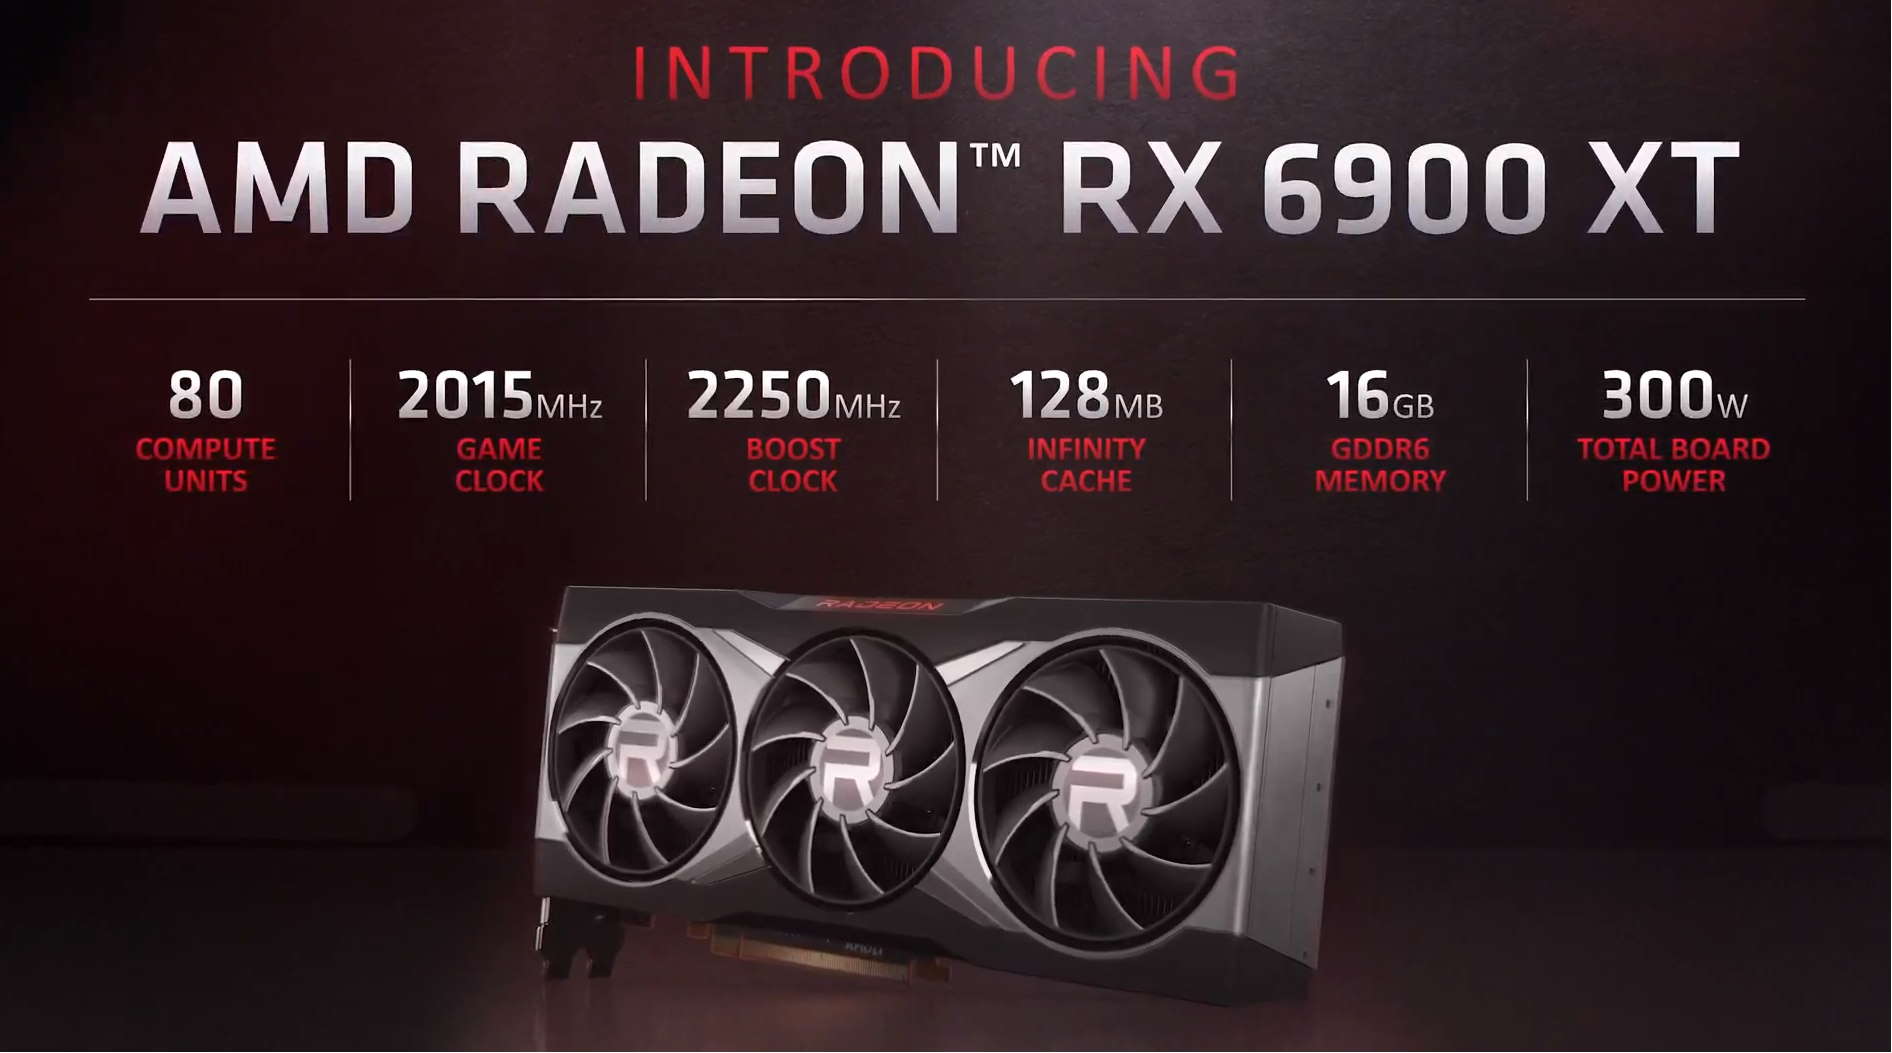 Презентации видеокарт из линейки AMD RADEON RX 6000: на уровне RTX 3080 за 649 $